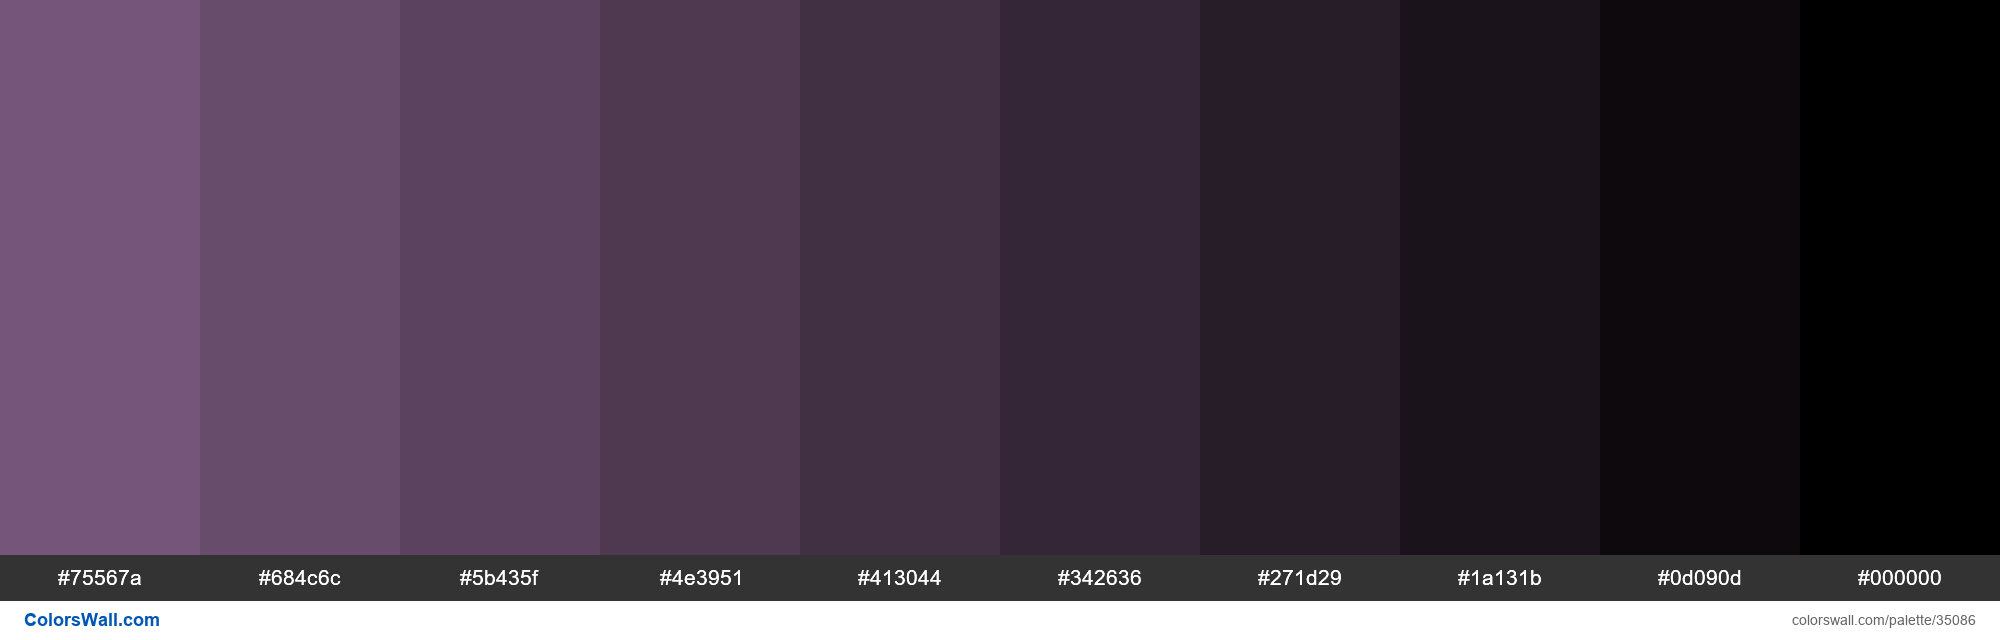 dusty” purple color